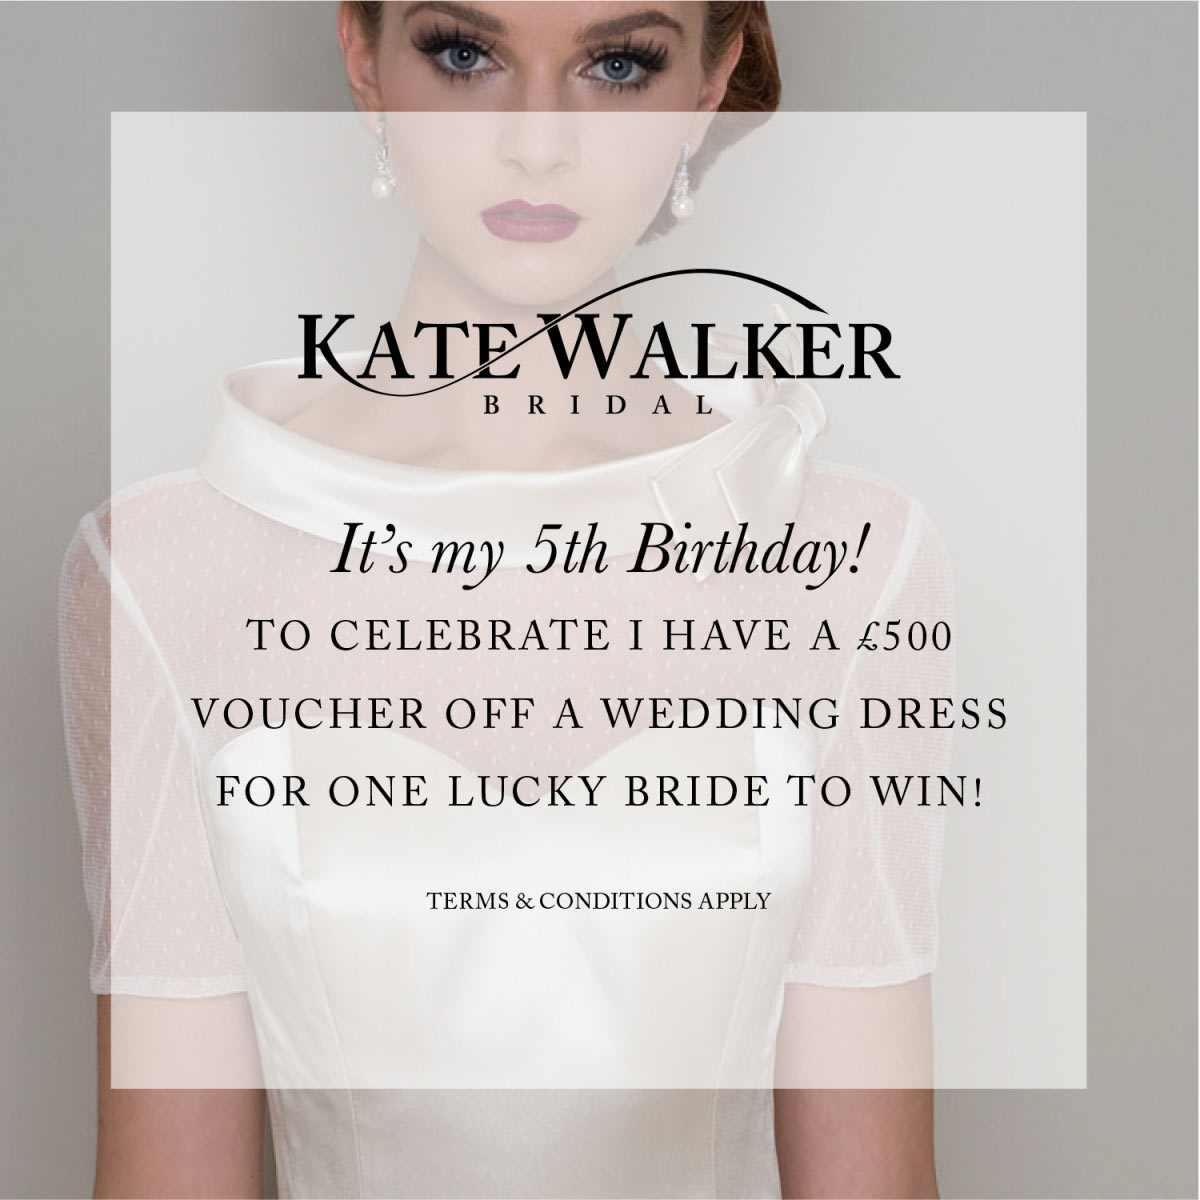 Win £500 off your wedding dress at Kate Walker Bridal!